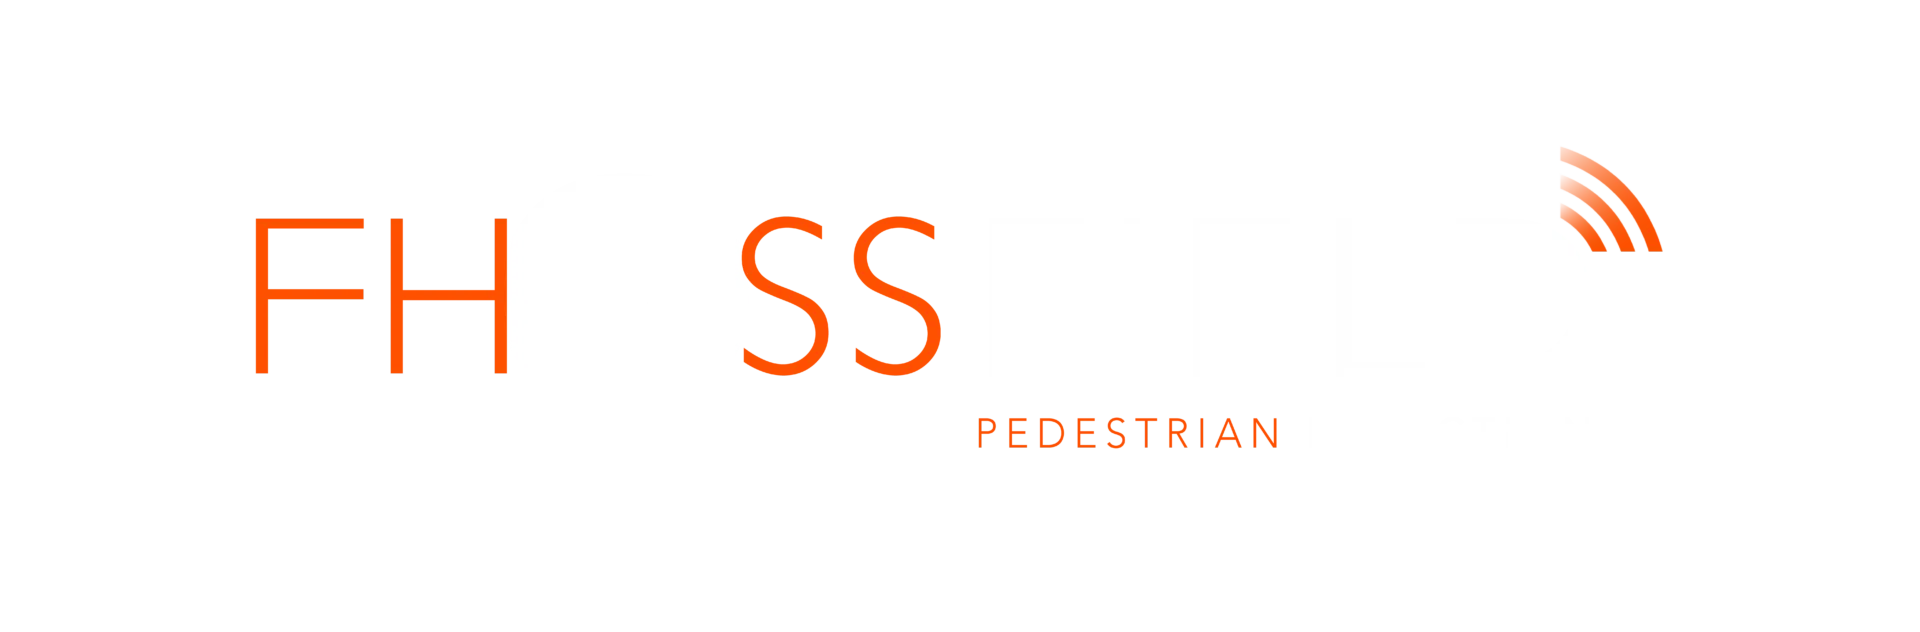 FHOSS Field Pedestrian Safety System logo